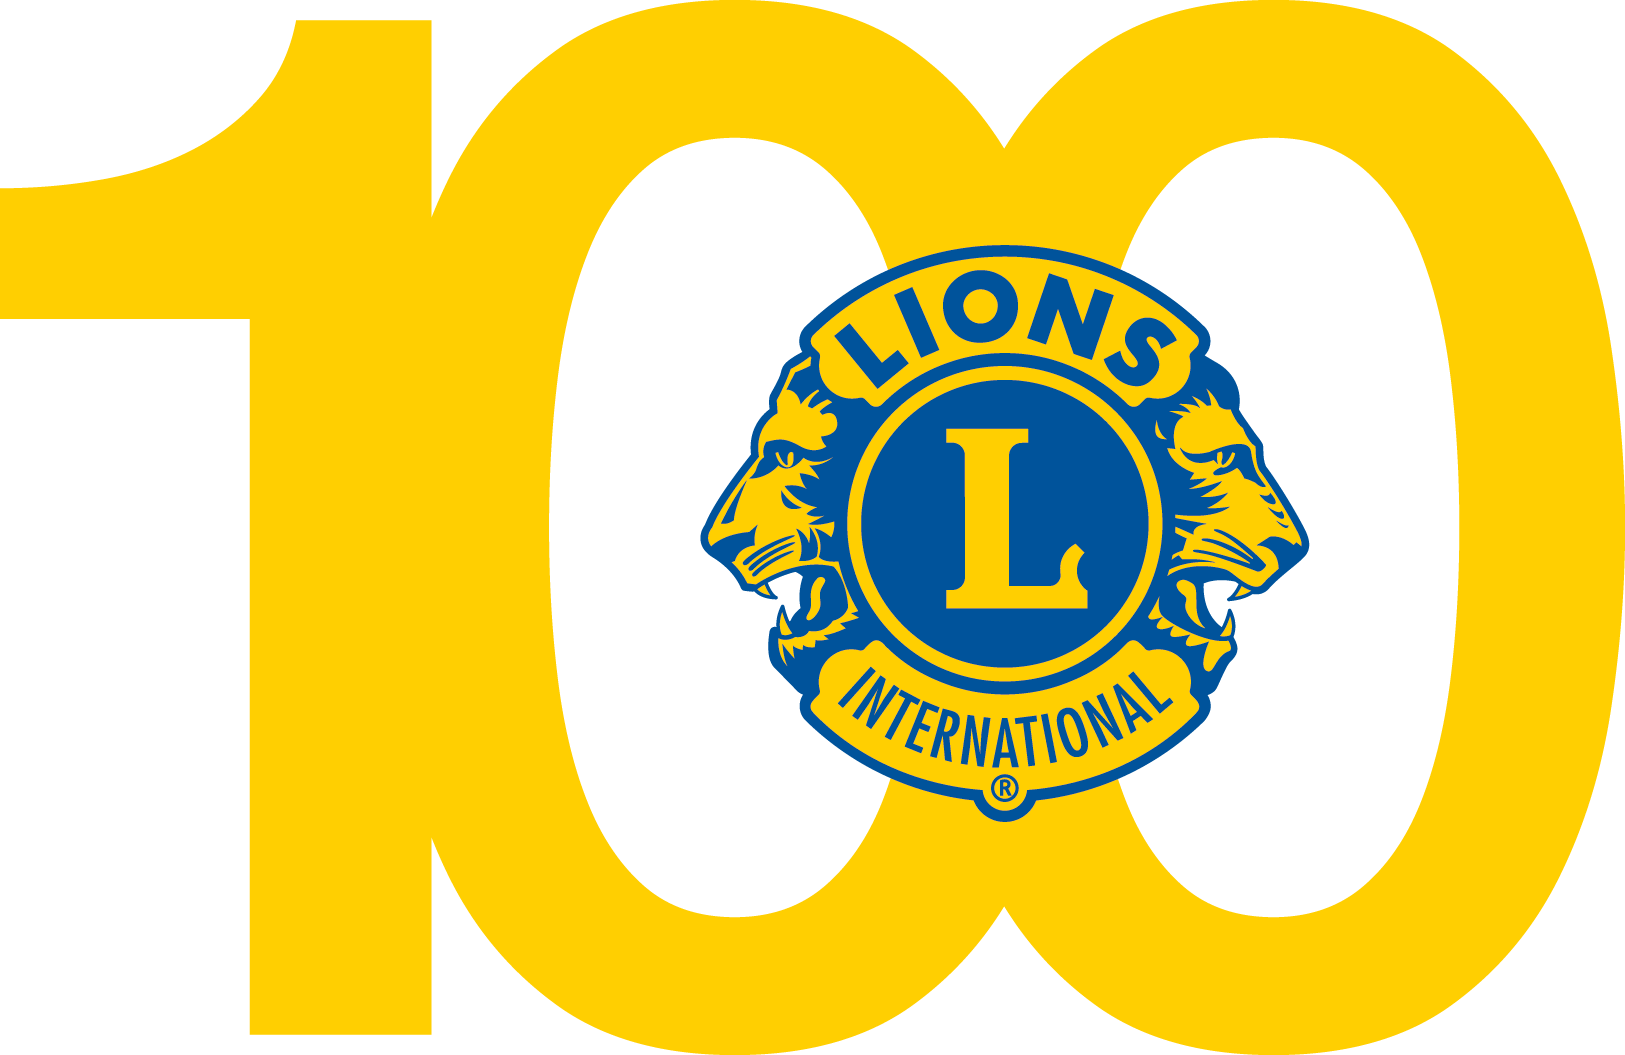 Lions Club Logo - Image result for lions club logo | Lions | Lion, Lions clubs ...